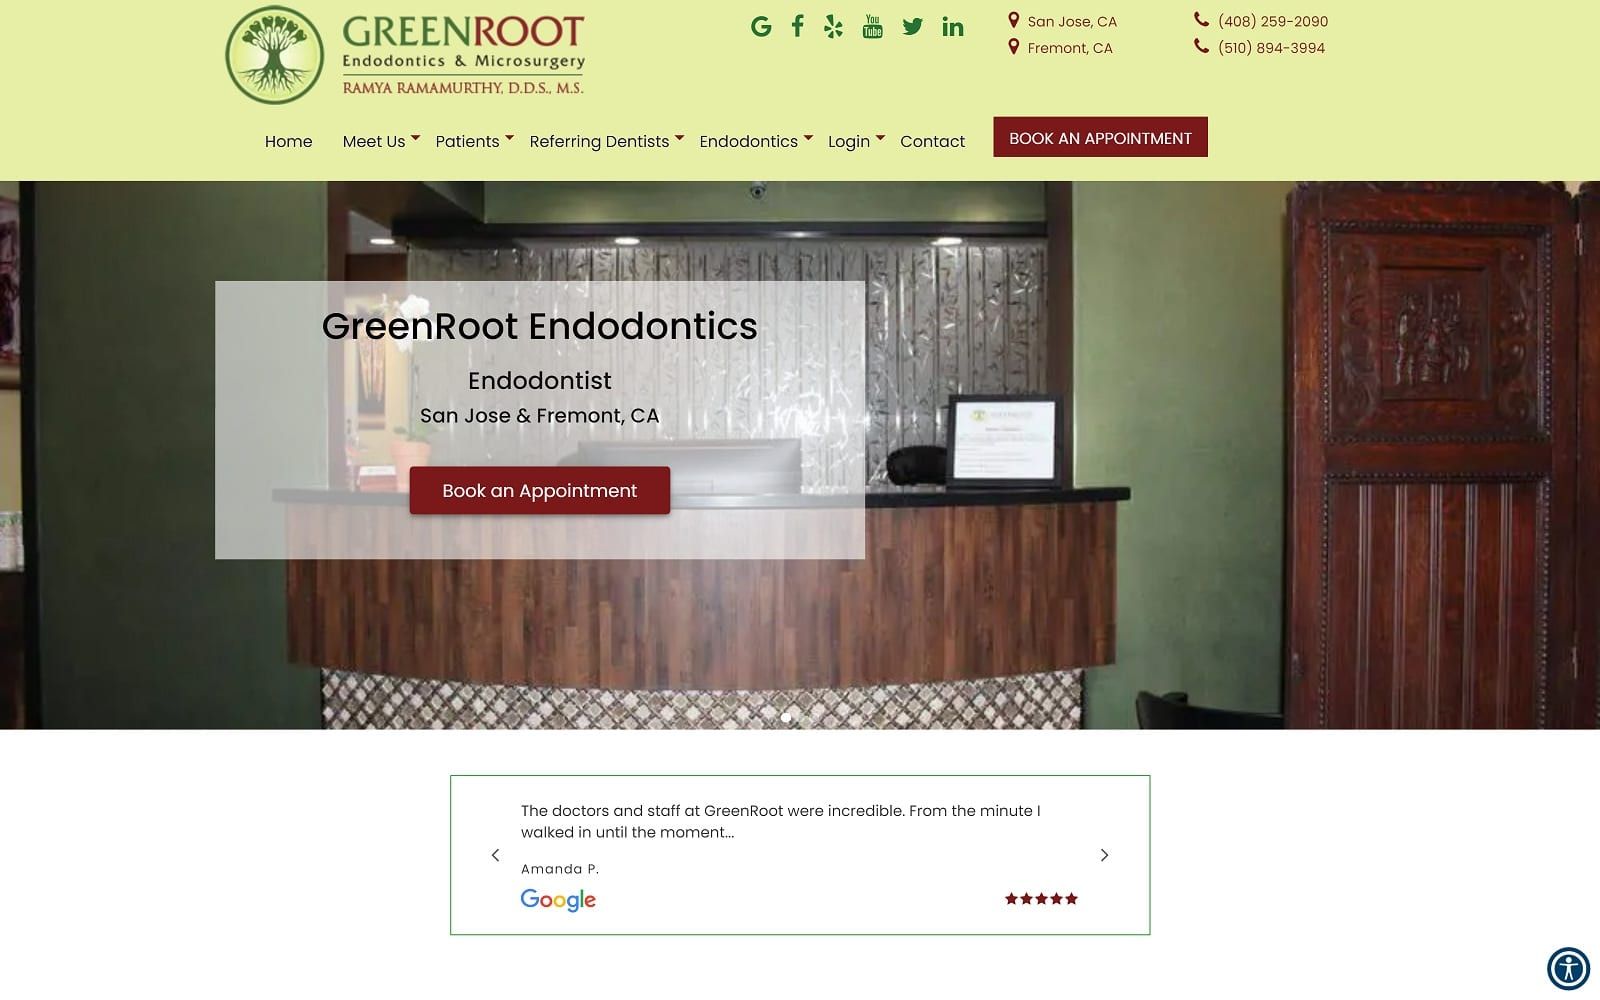 The screenshot of greenroot endodontics & microsurgery greenrootendo. Com website